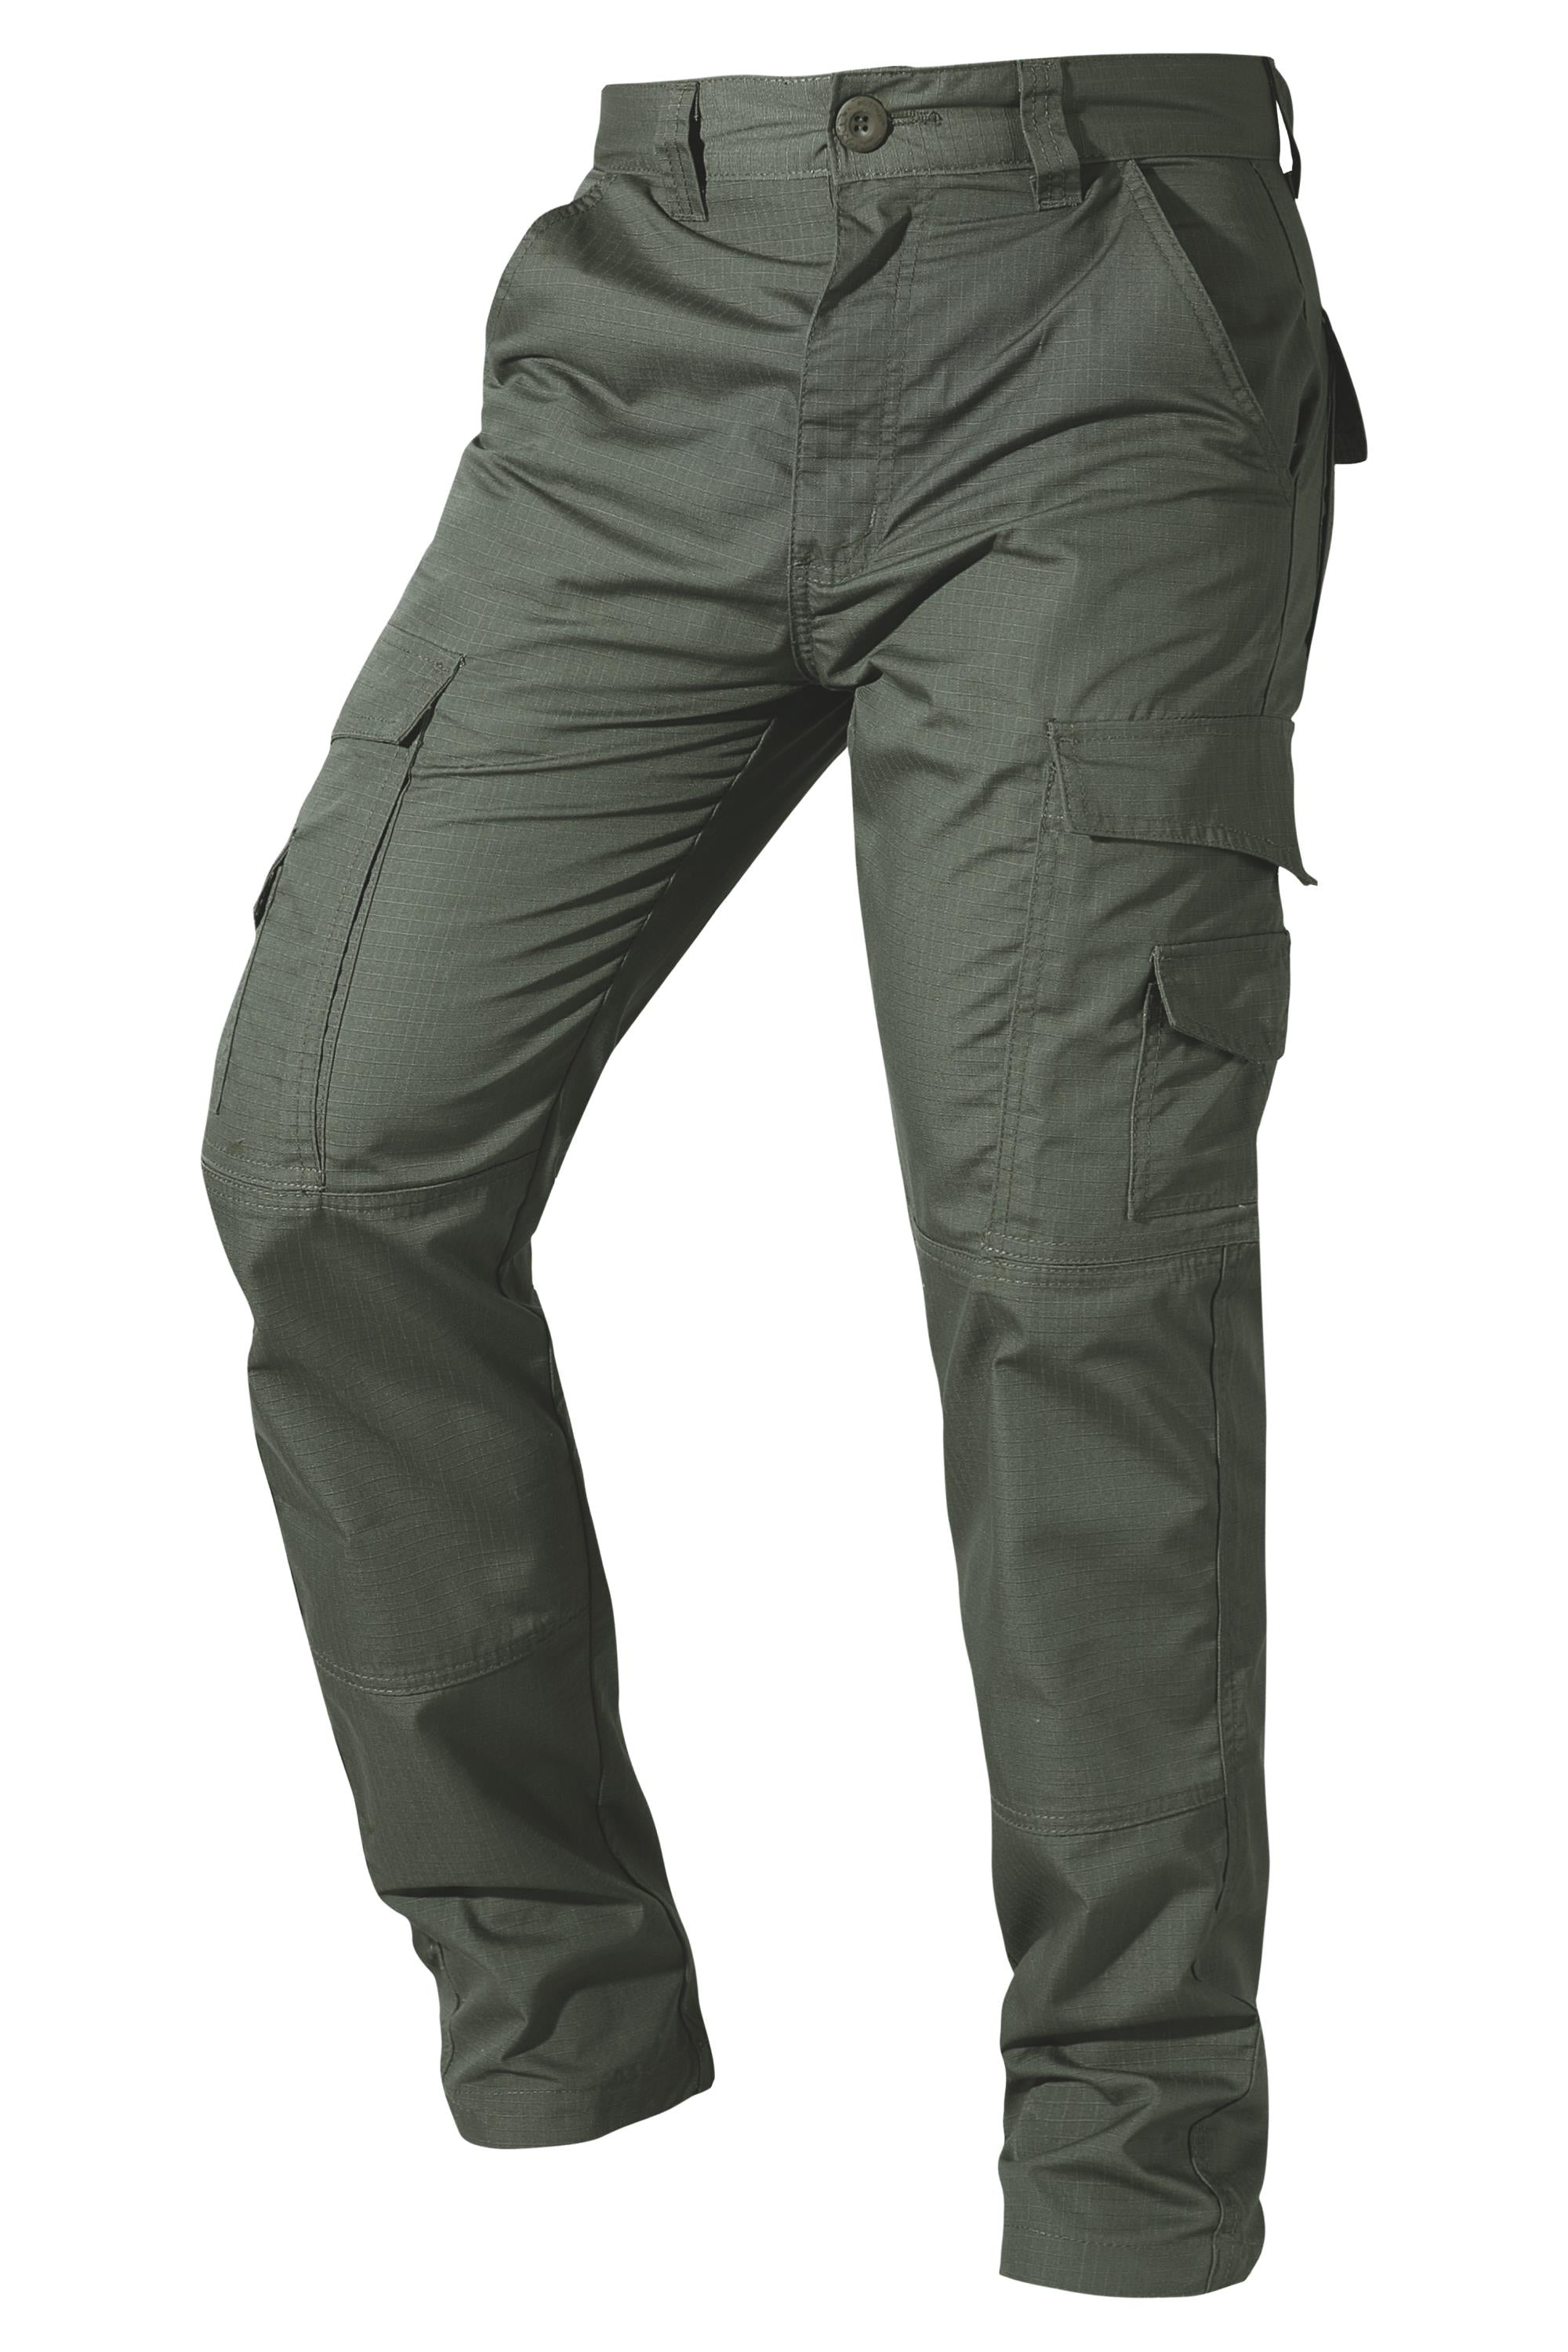 US Men's Cargo Work Pants 100% Cotton Workwear Tactical Combat Outdoor Long  Pant